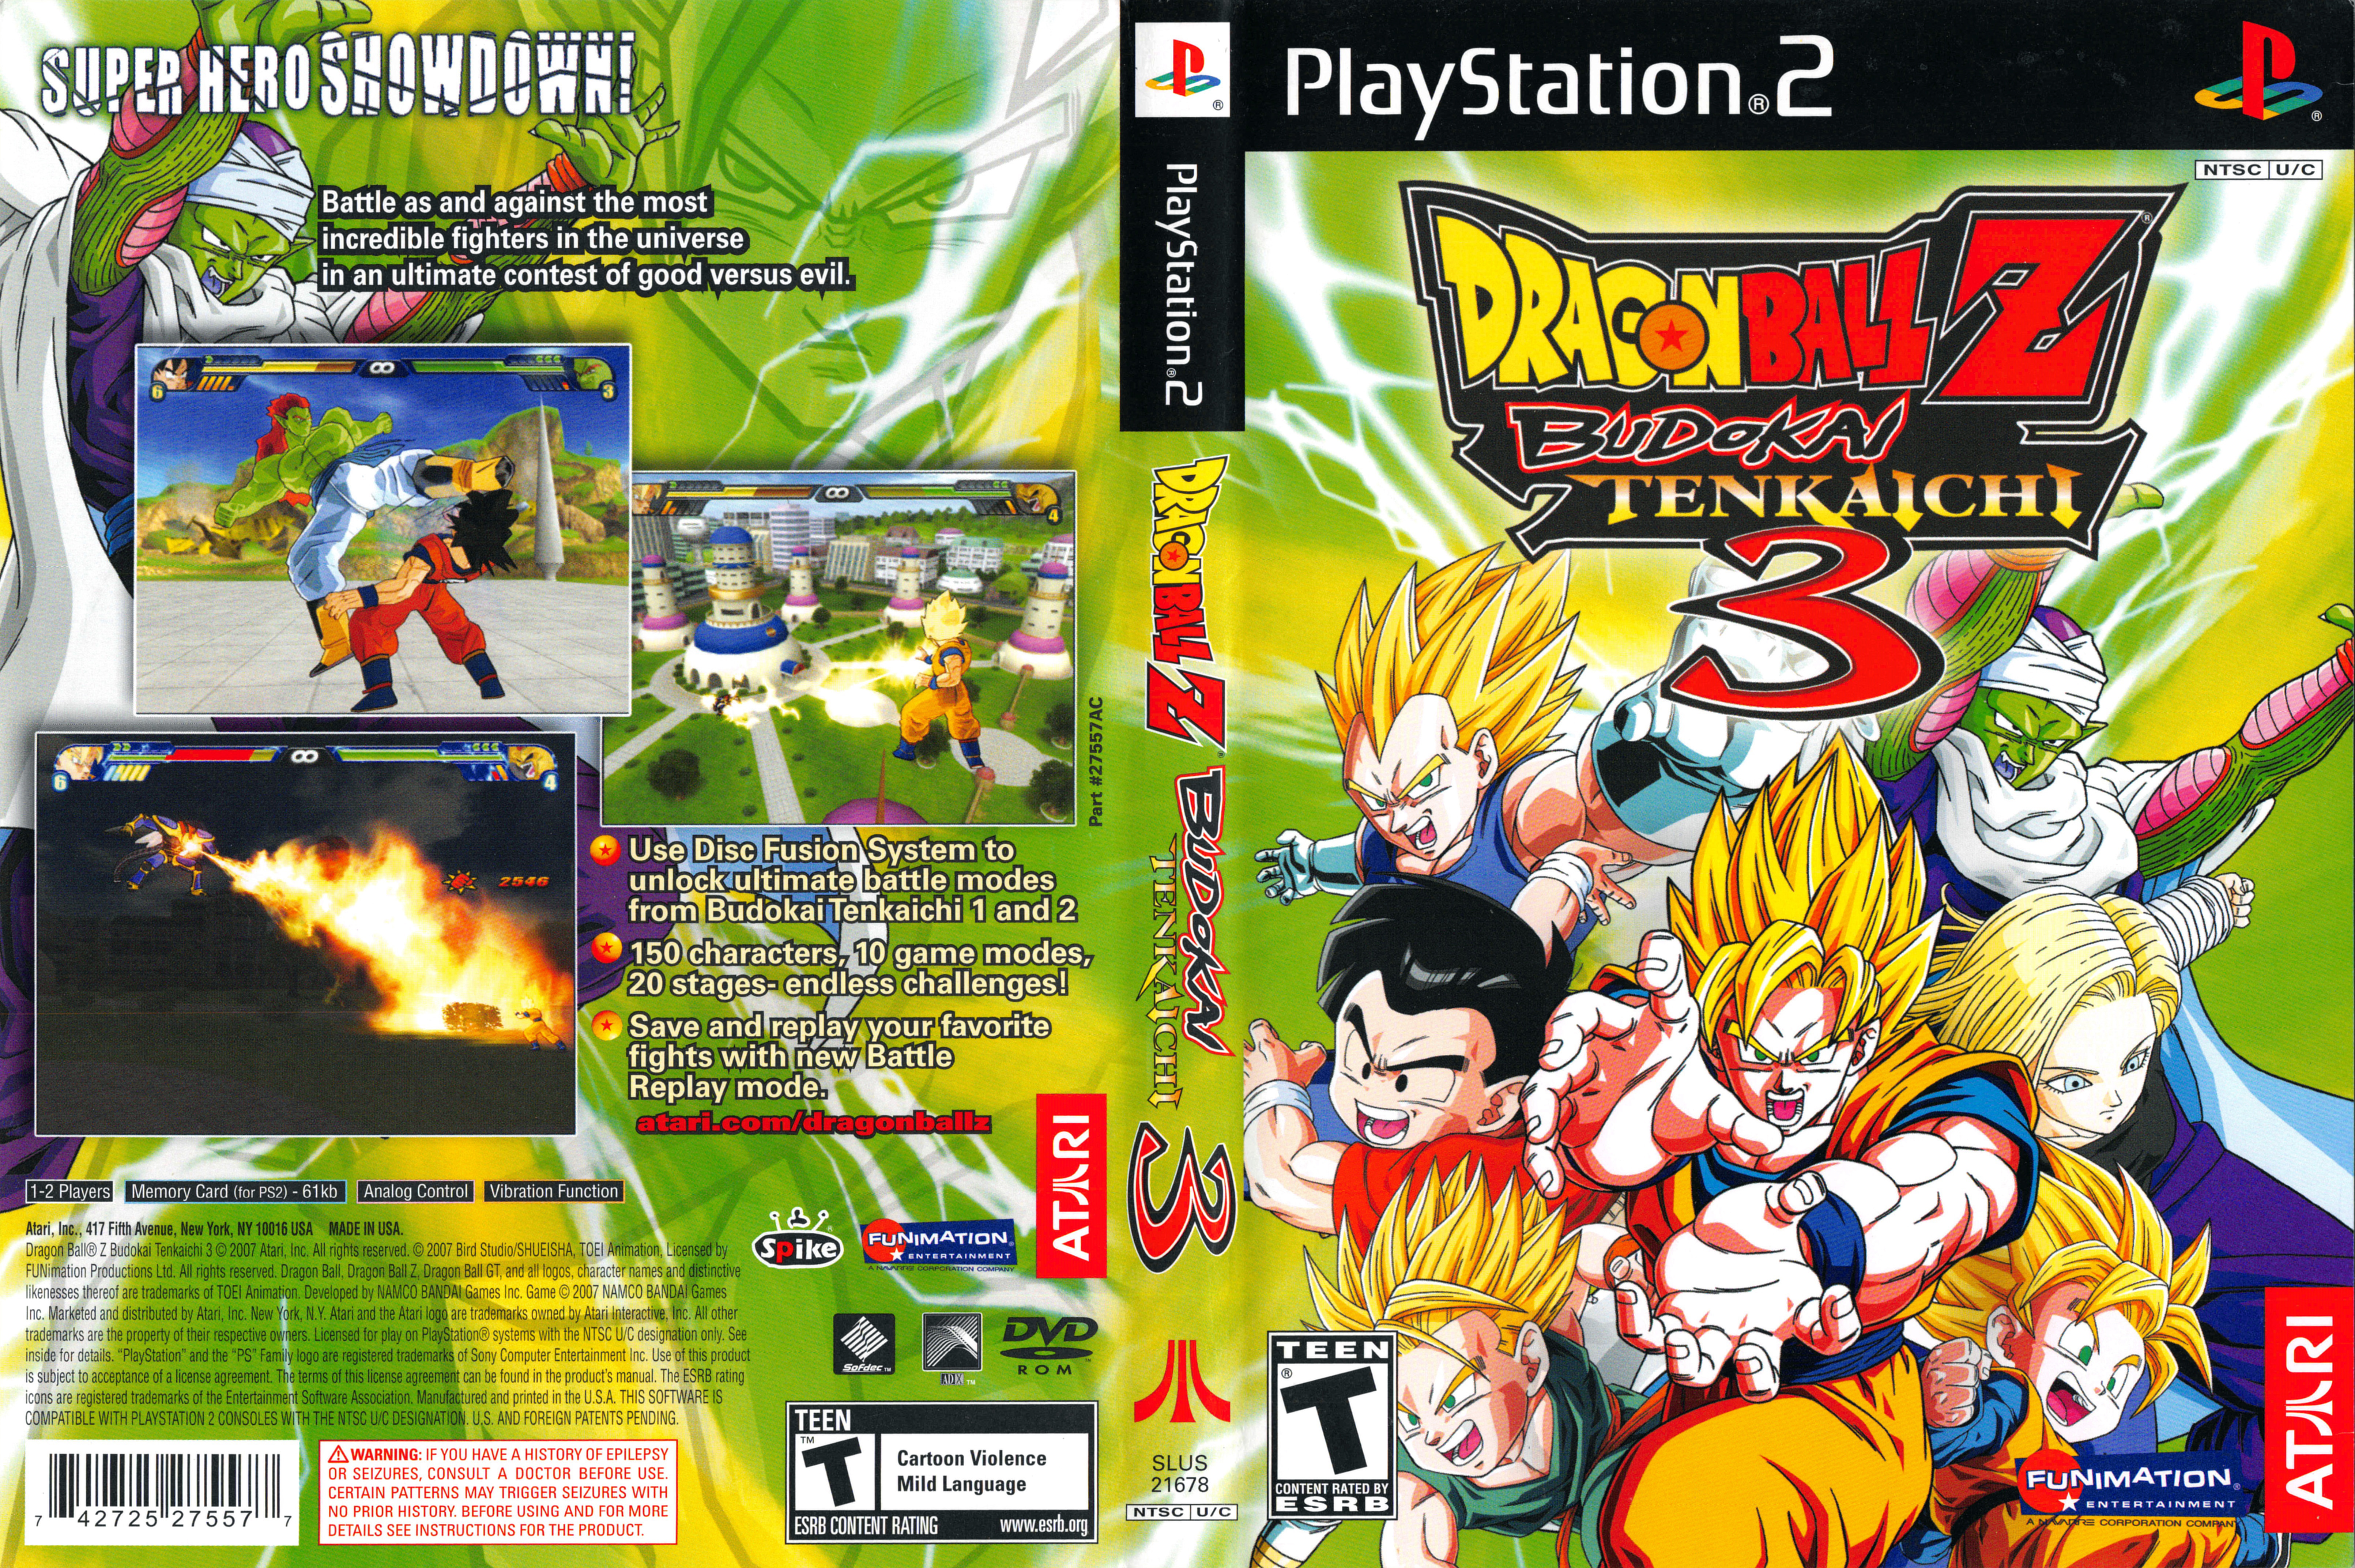 Dragon Ball Z Budokai Tenkaichi 3 PS2 Game Free Download Full Version